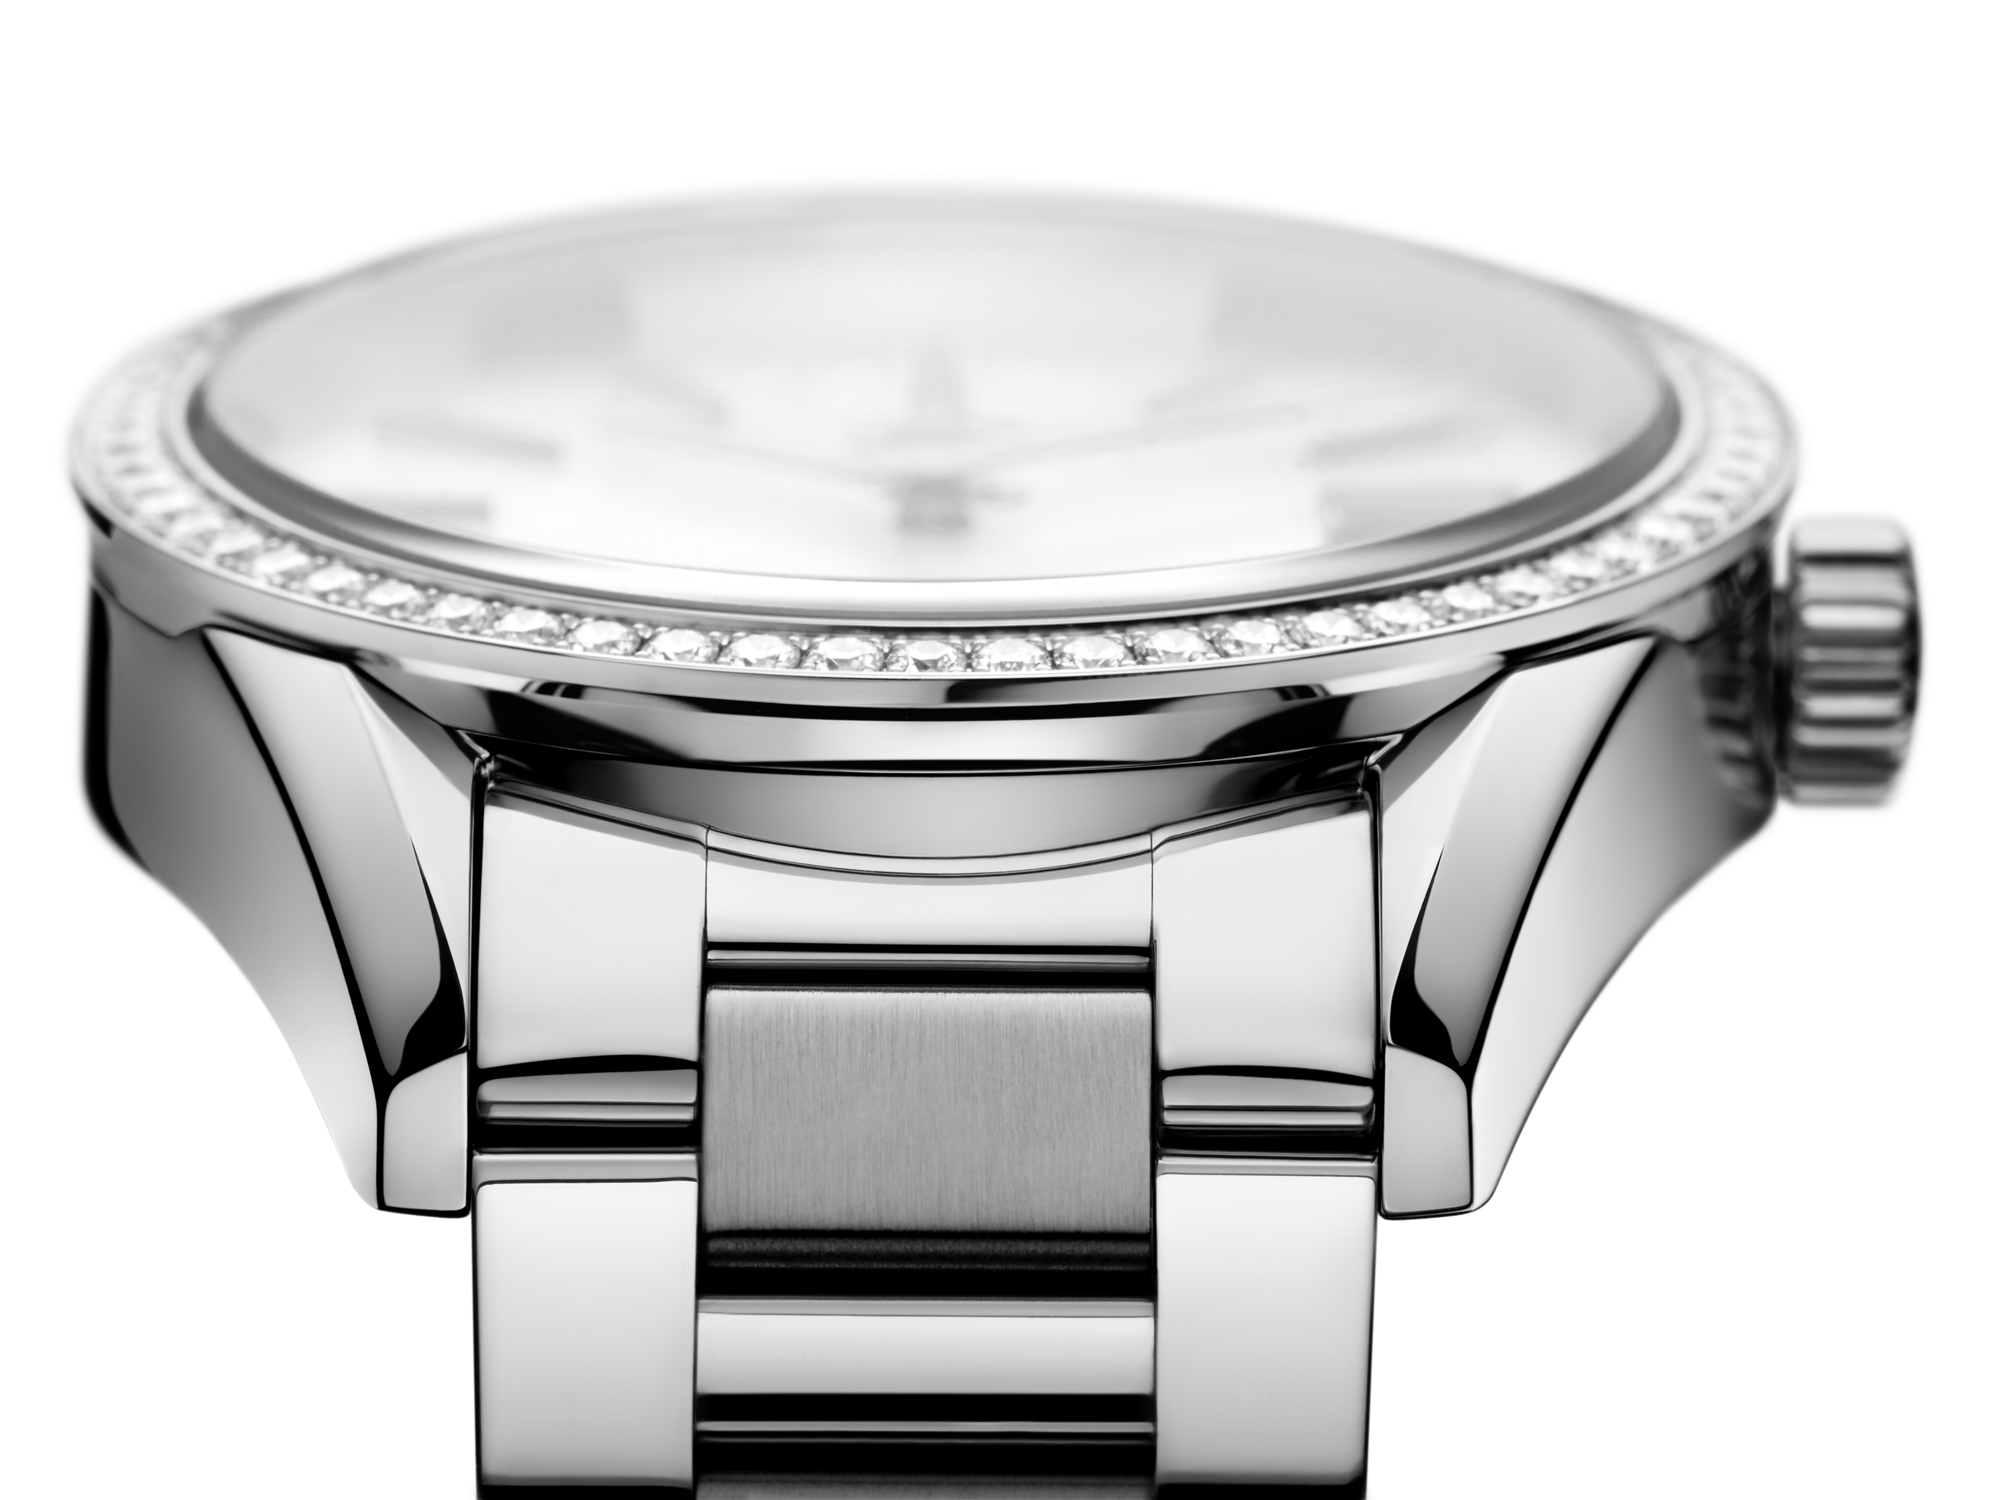 TAG Heuer Aquaracer Quartz Chronograph Black Dial Men's Watch - CAY1110. BA0927TAG Heuer Aquaracer Quartz Chronograph Black Dial Men's Watch - CAY111A. BA0927